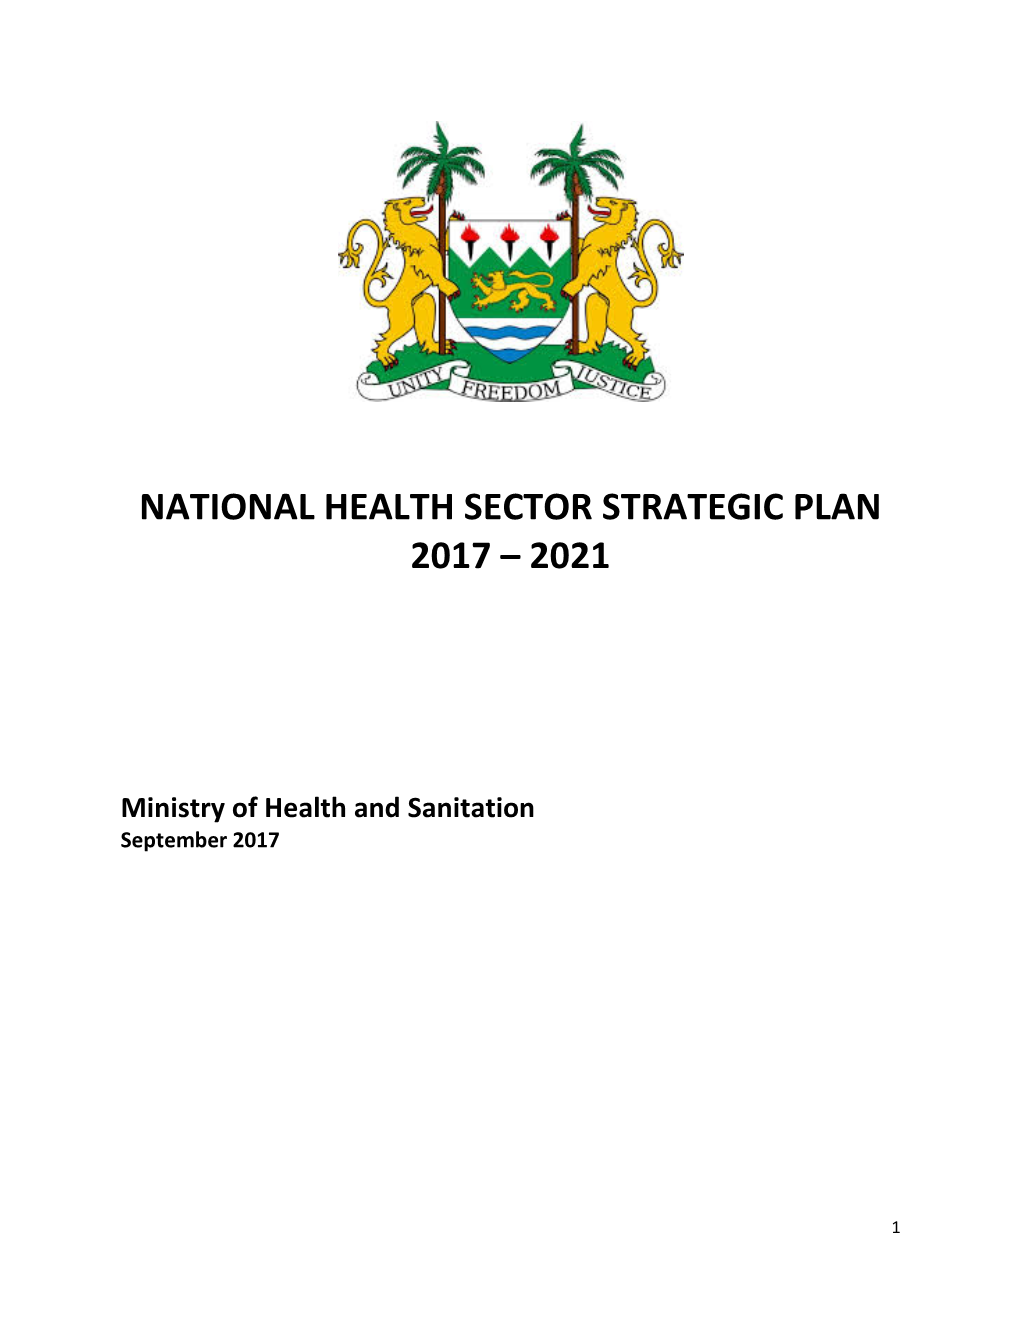 Sierra Leone National Health Sector Strategy Plan 2017-2021